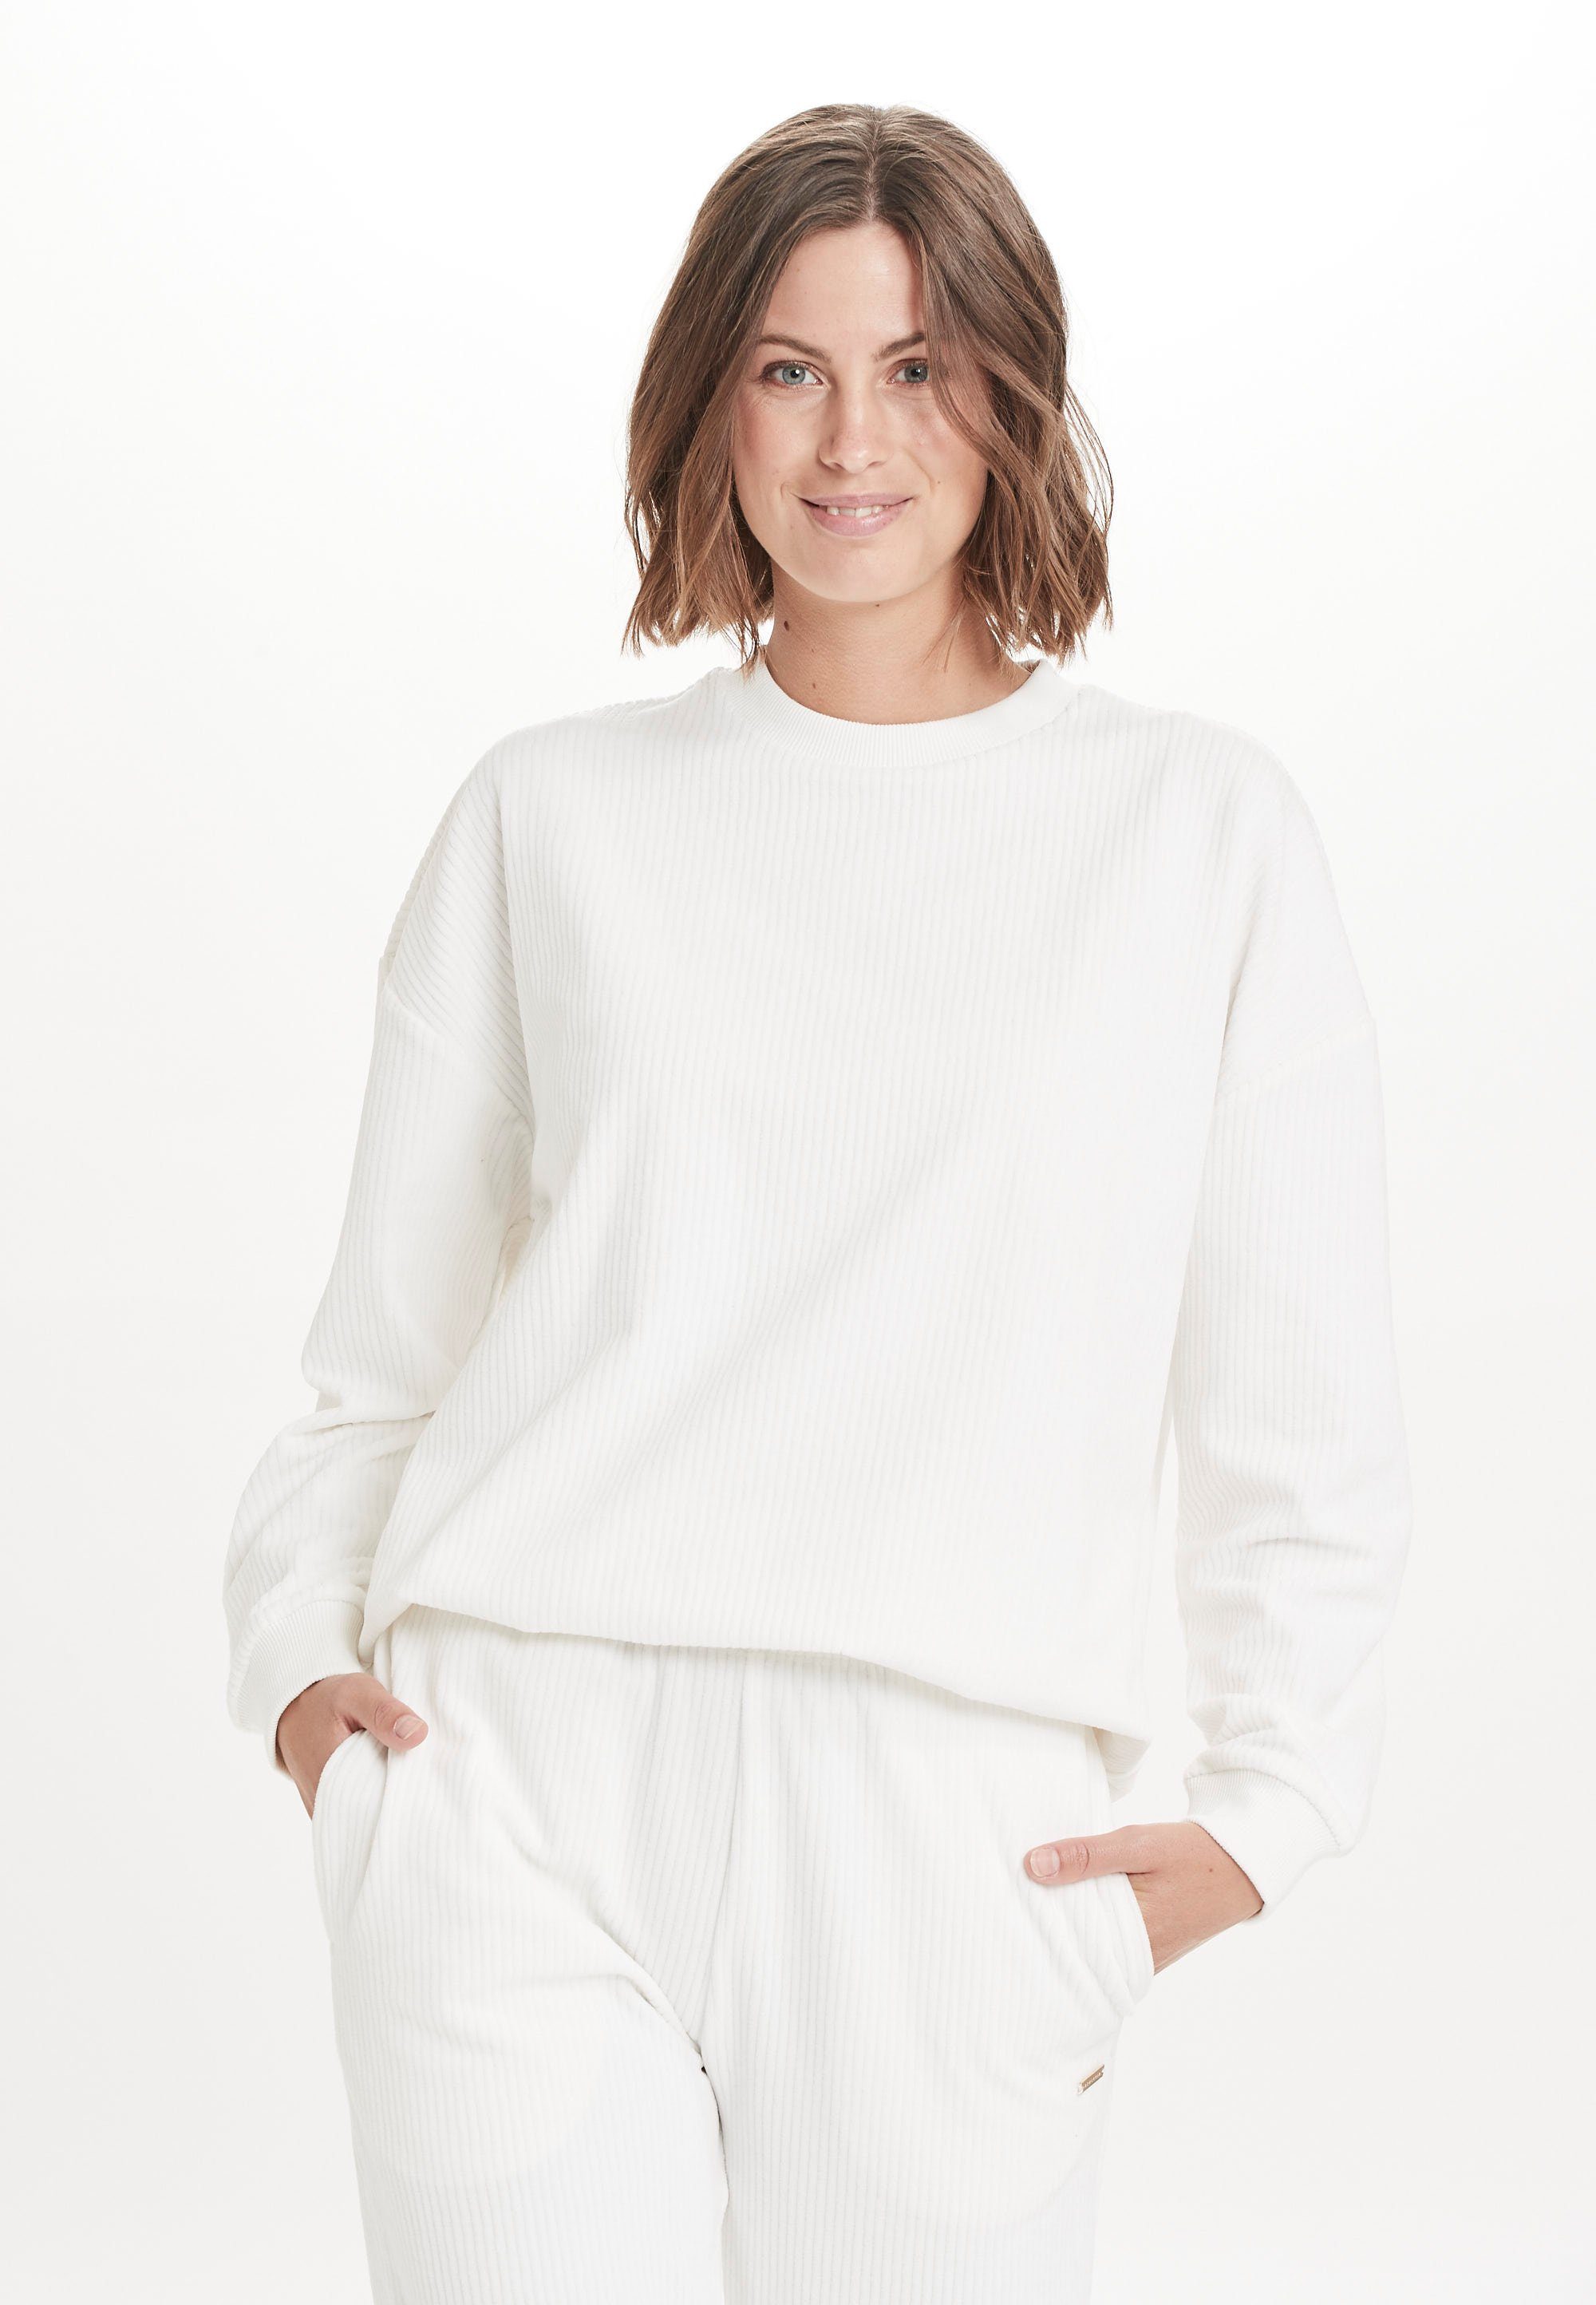 ATHLECIA Sweatshirt Marlie im trendigen Cord-Look